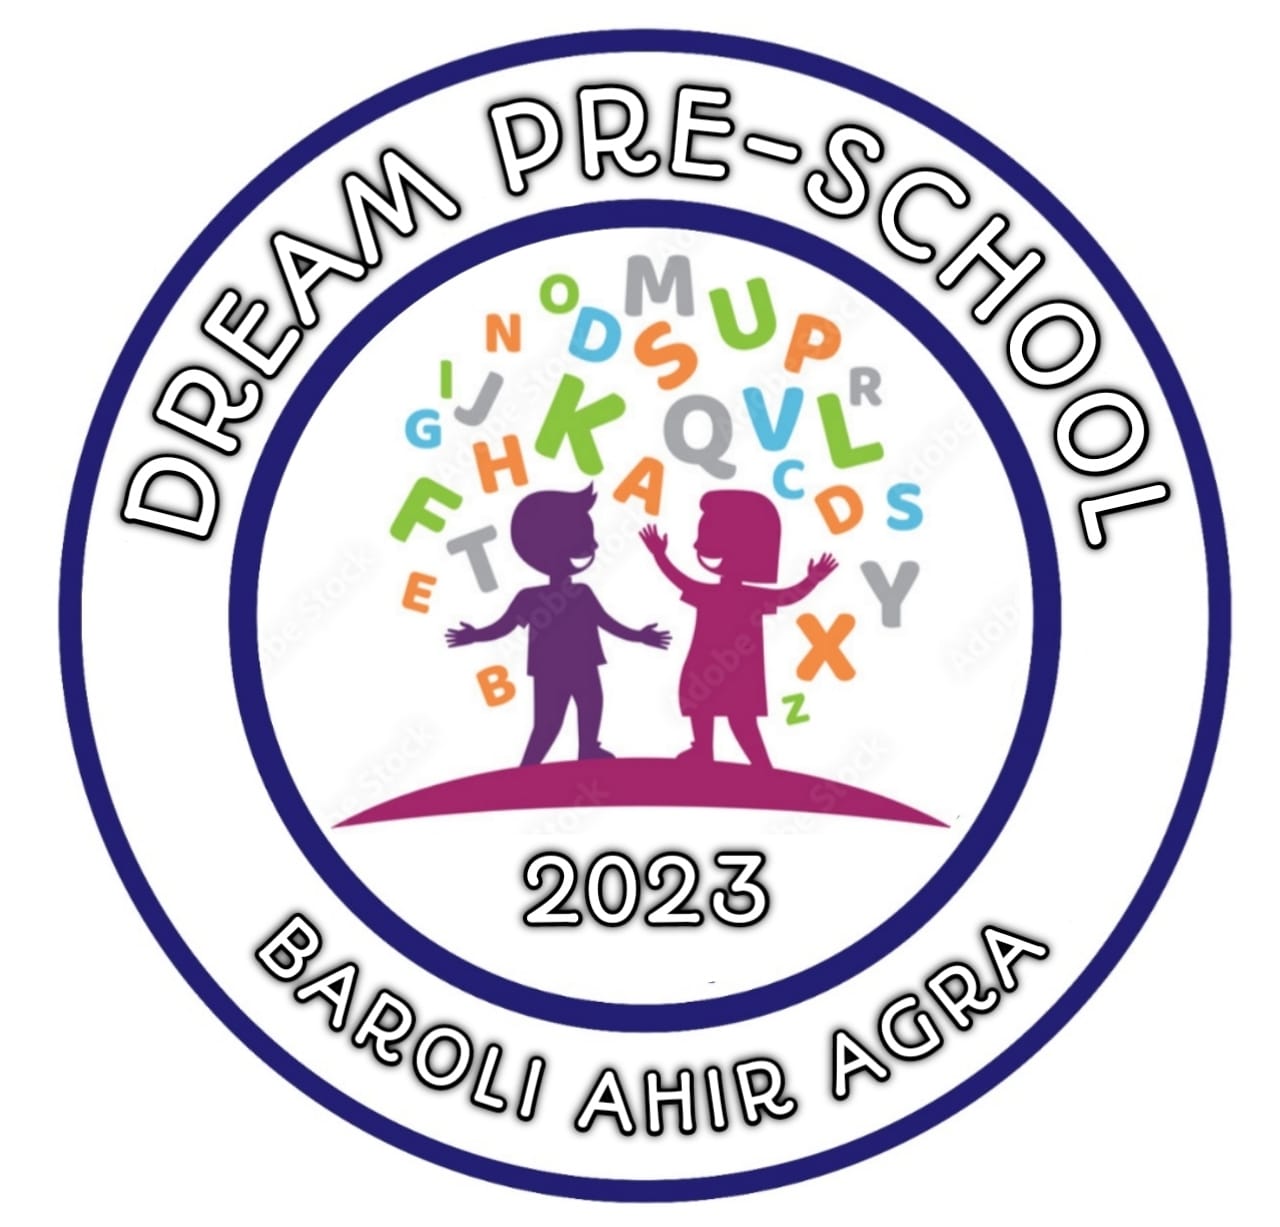 DREAM PreSchool|Schools|Education